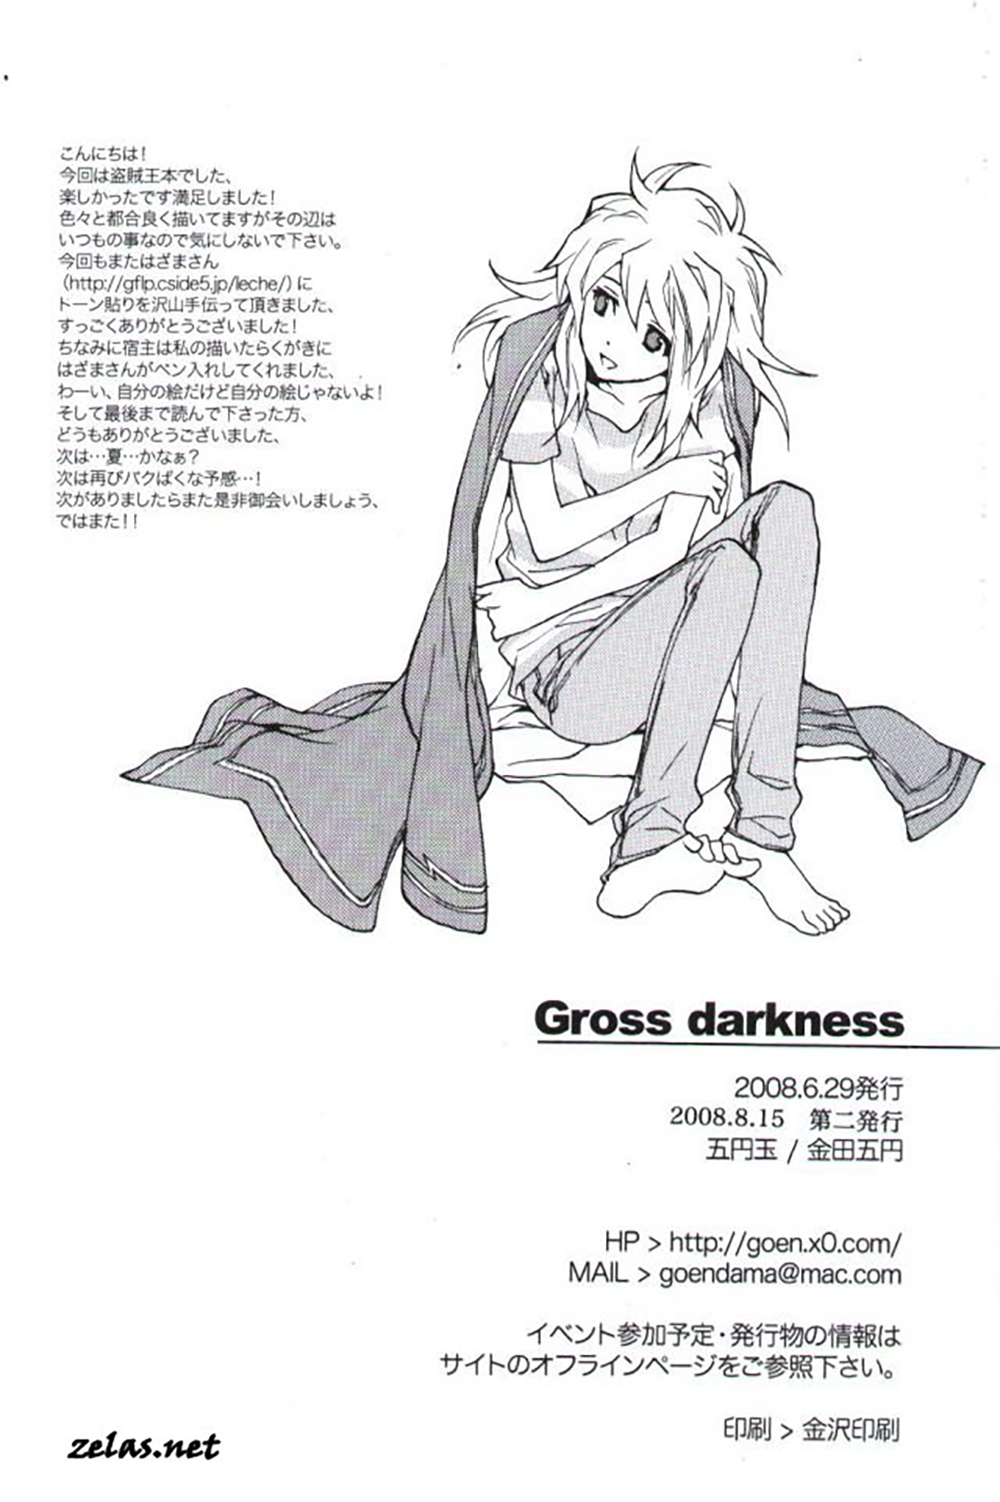 Gross Darkness numero d'image 35